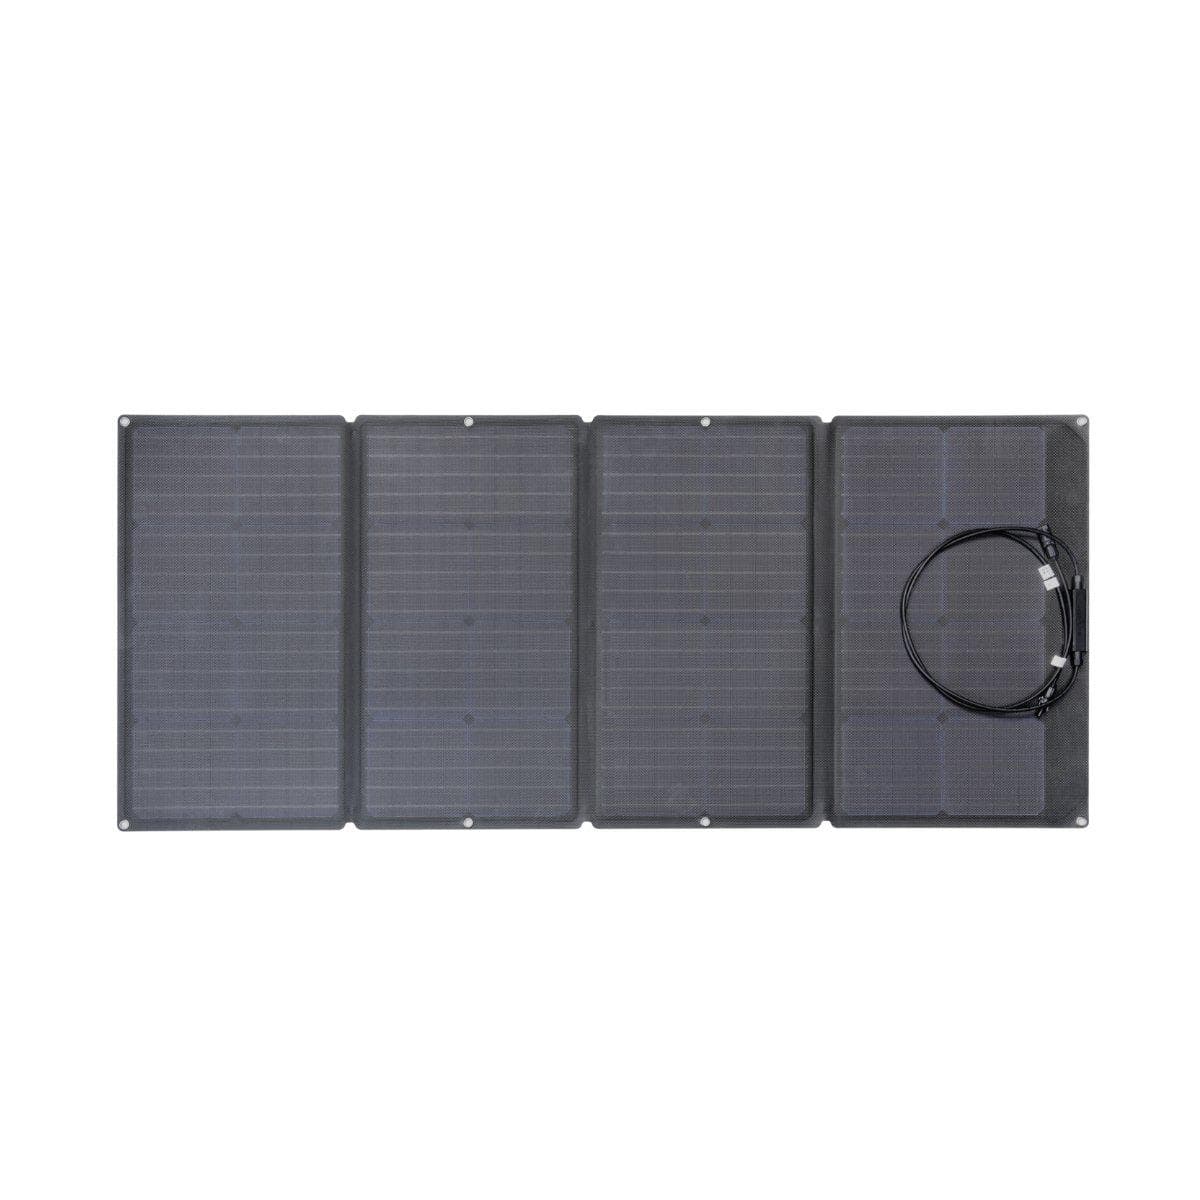 EcoFlow Portable Solar Panel | 160 Watts